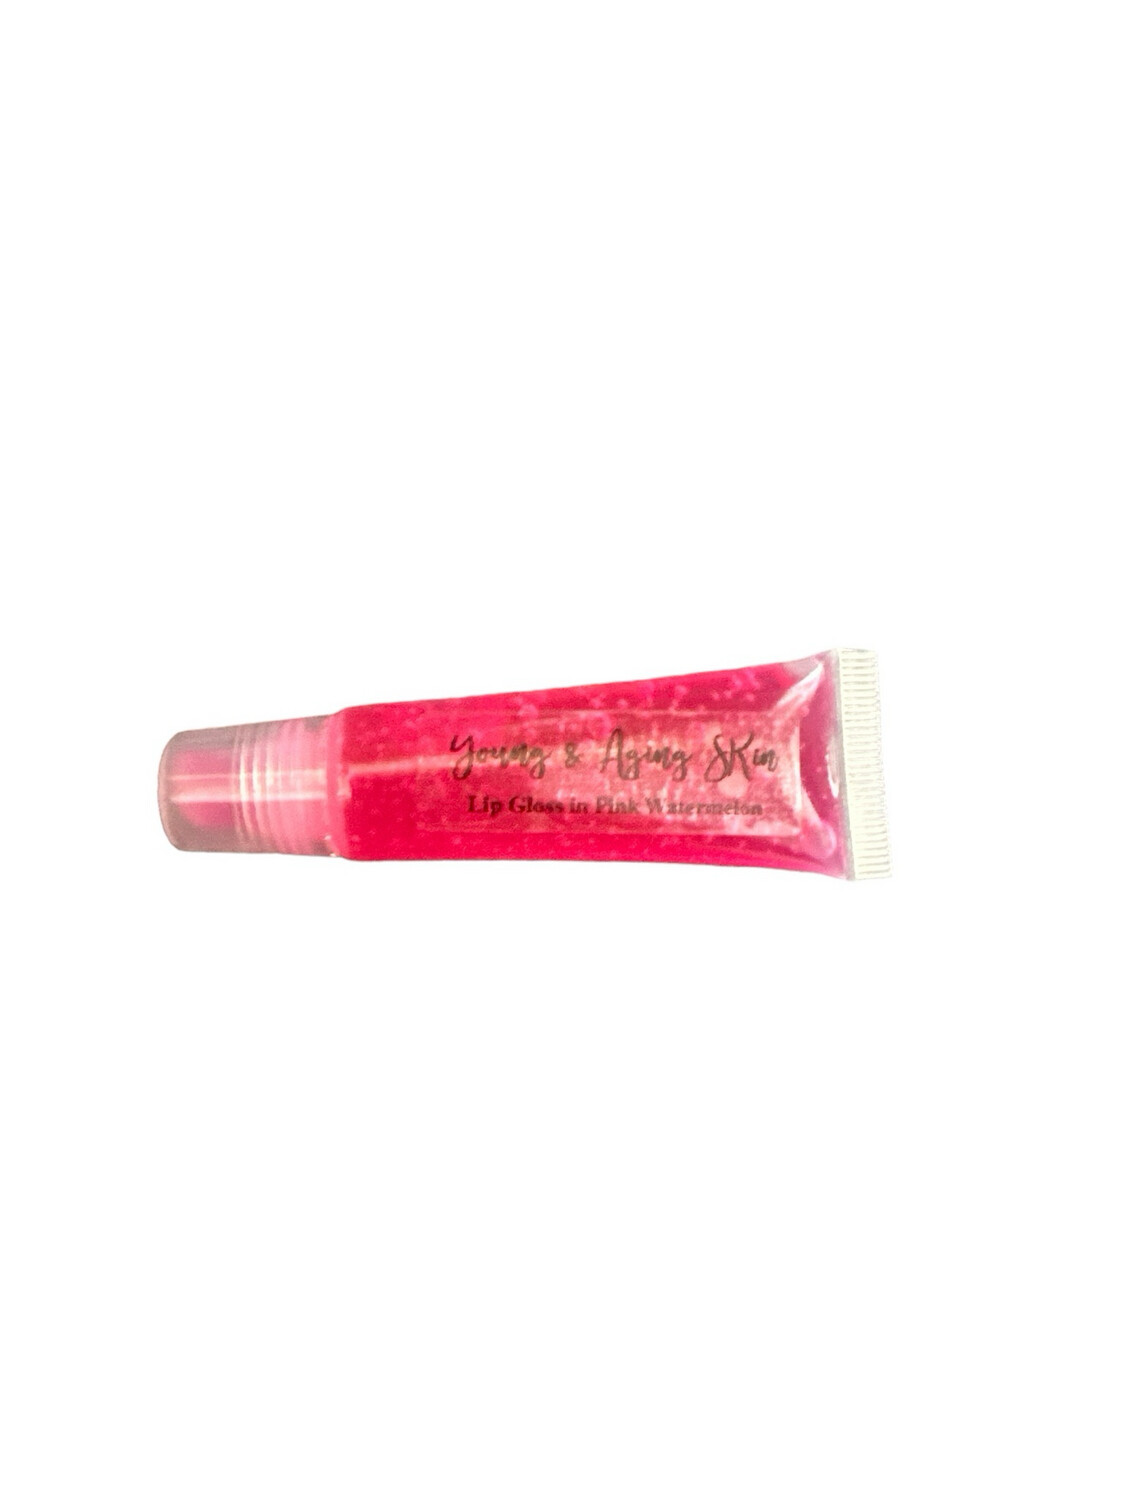 Lip Gloss In Pink Watermelon